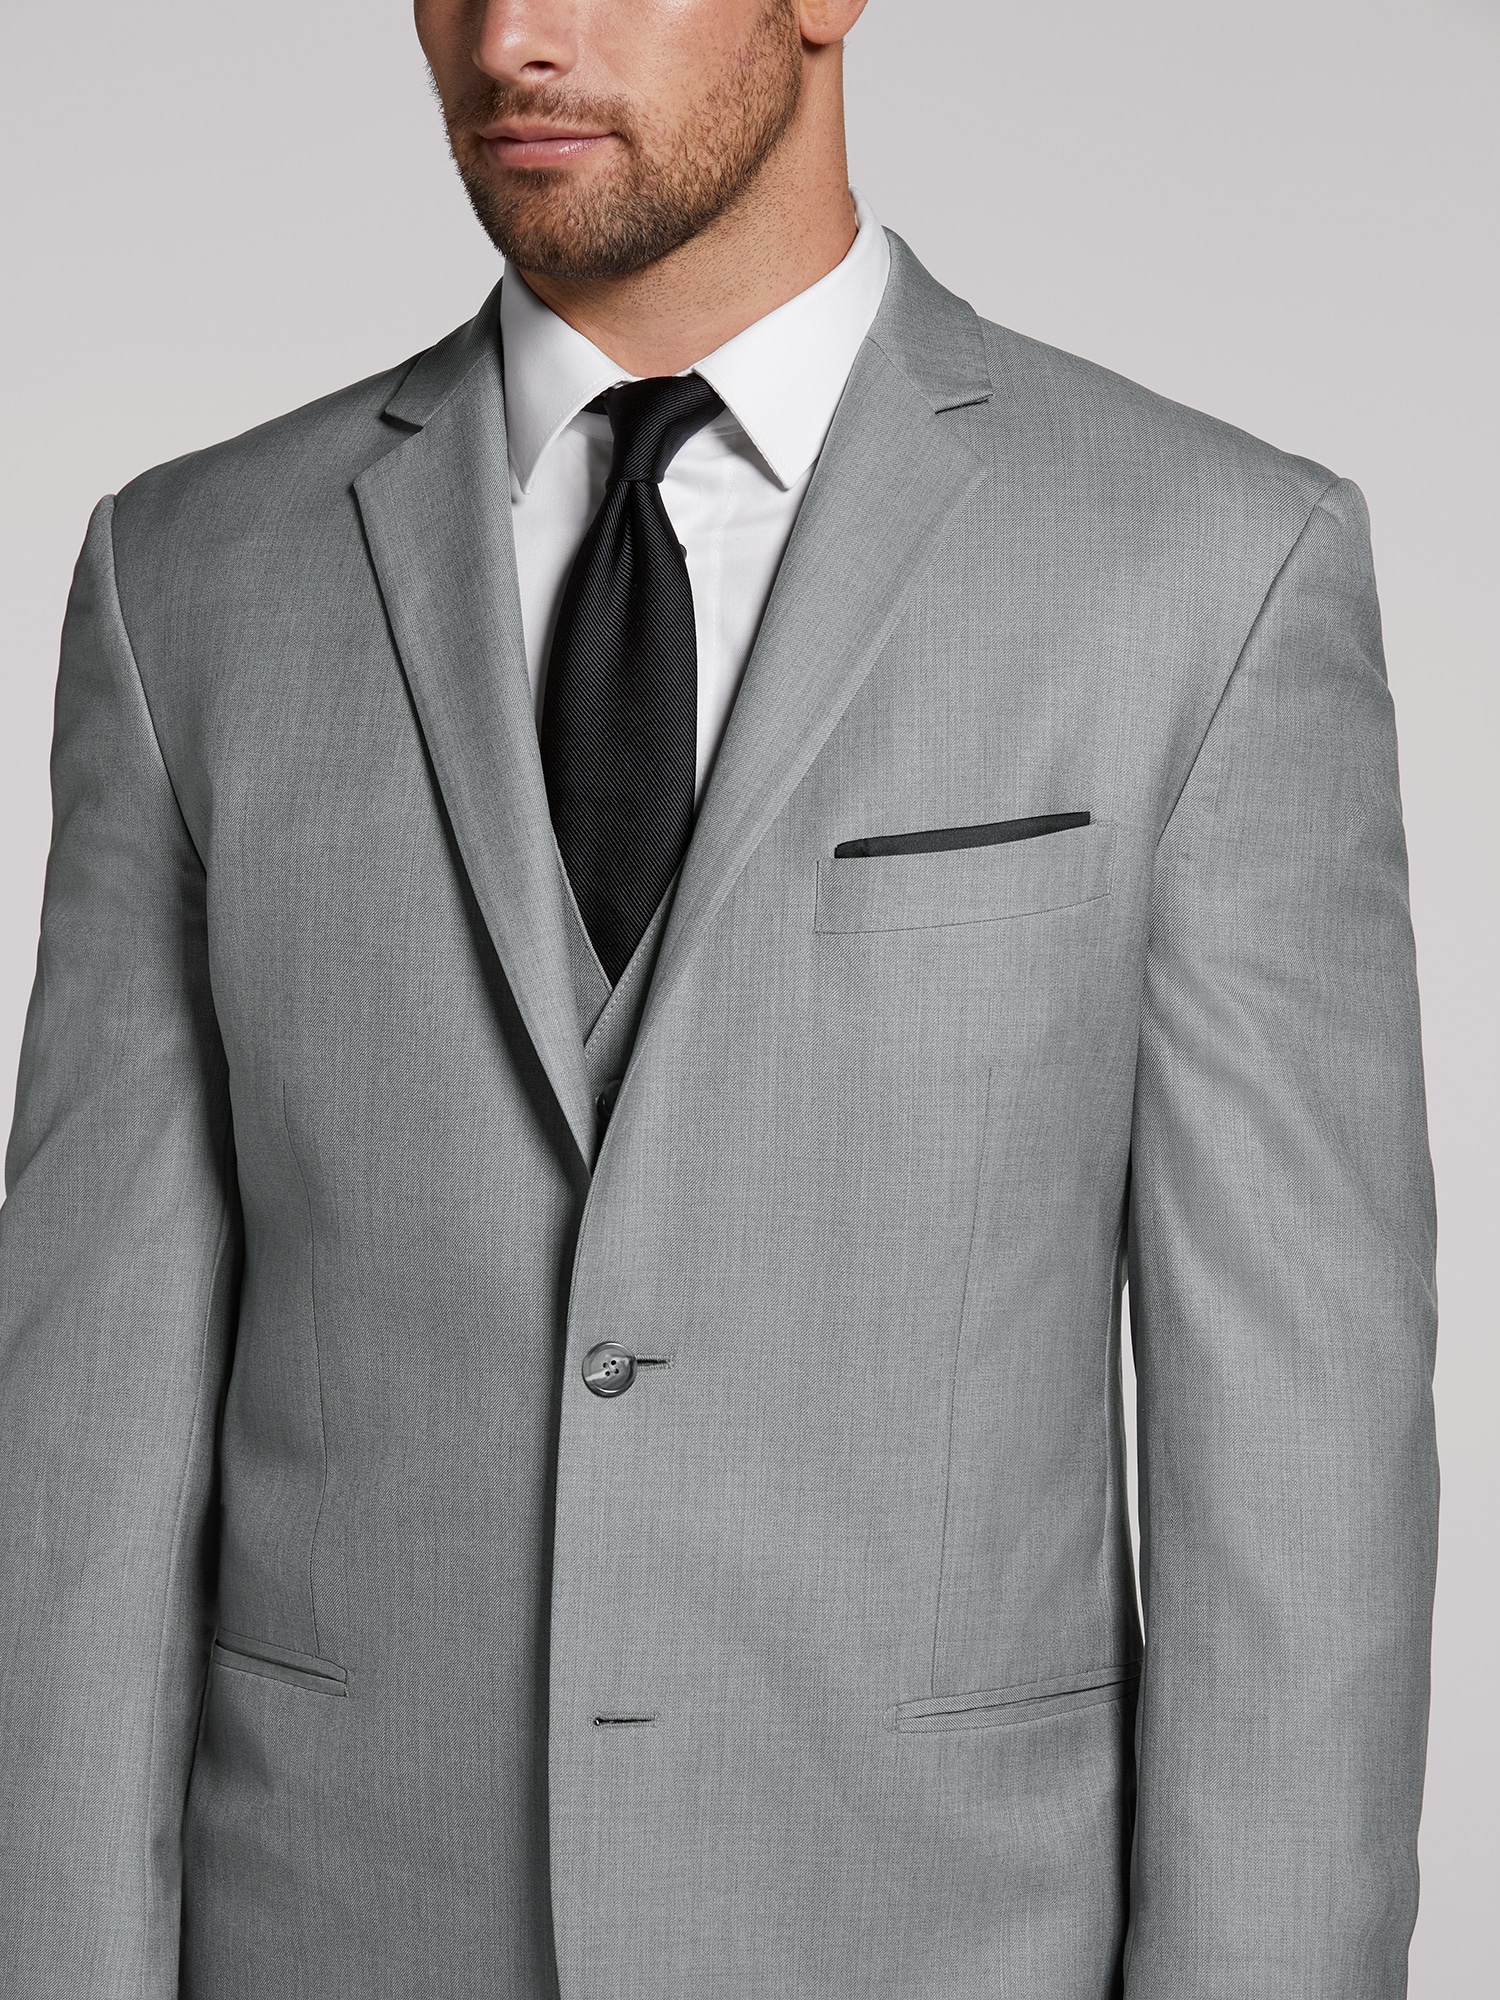 Vintage Men's Grey Suit by Pronto Uomo | Suit Rental